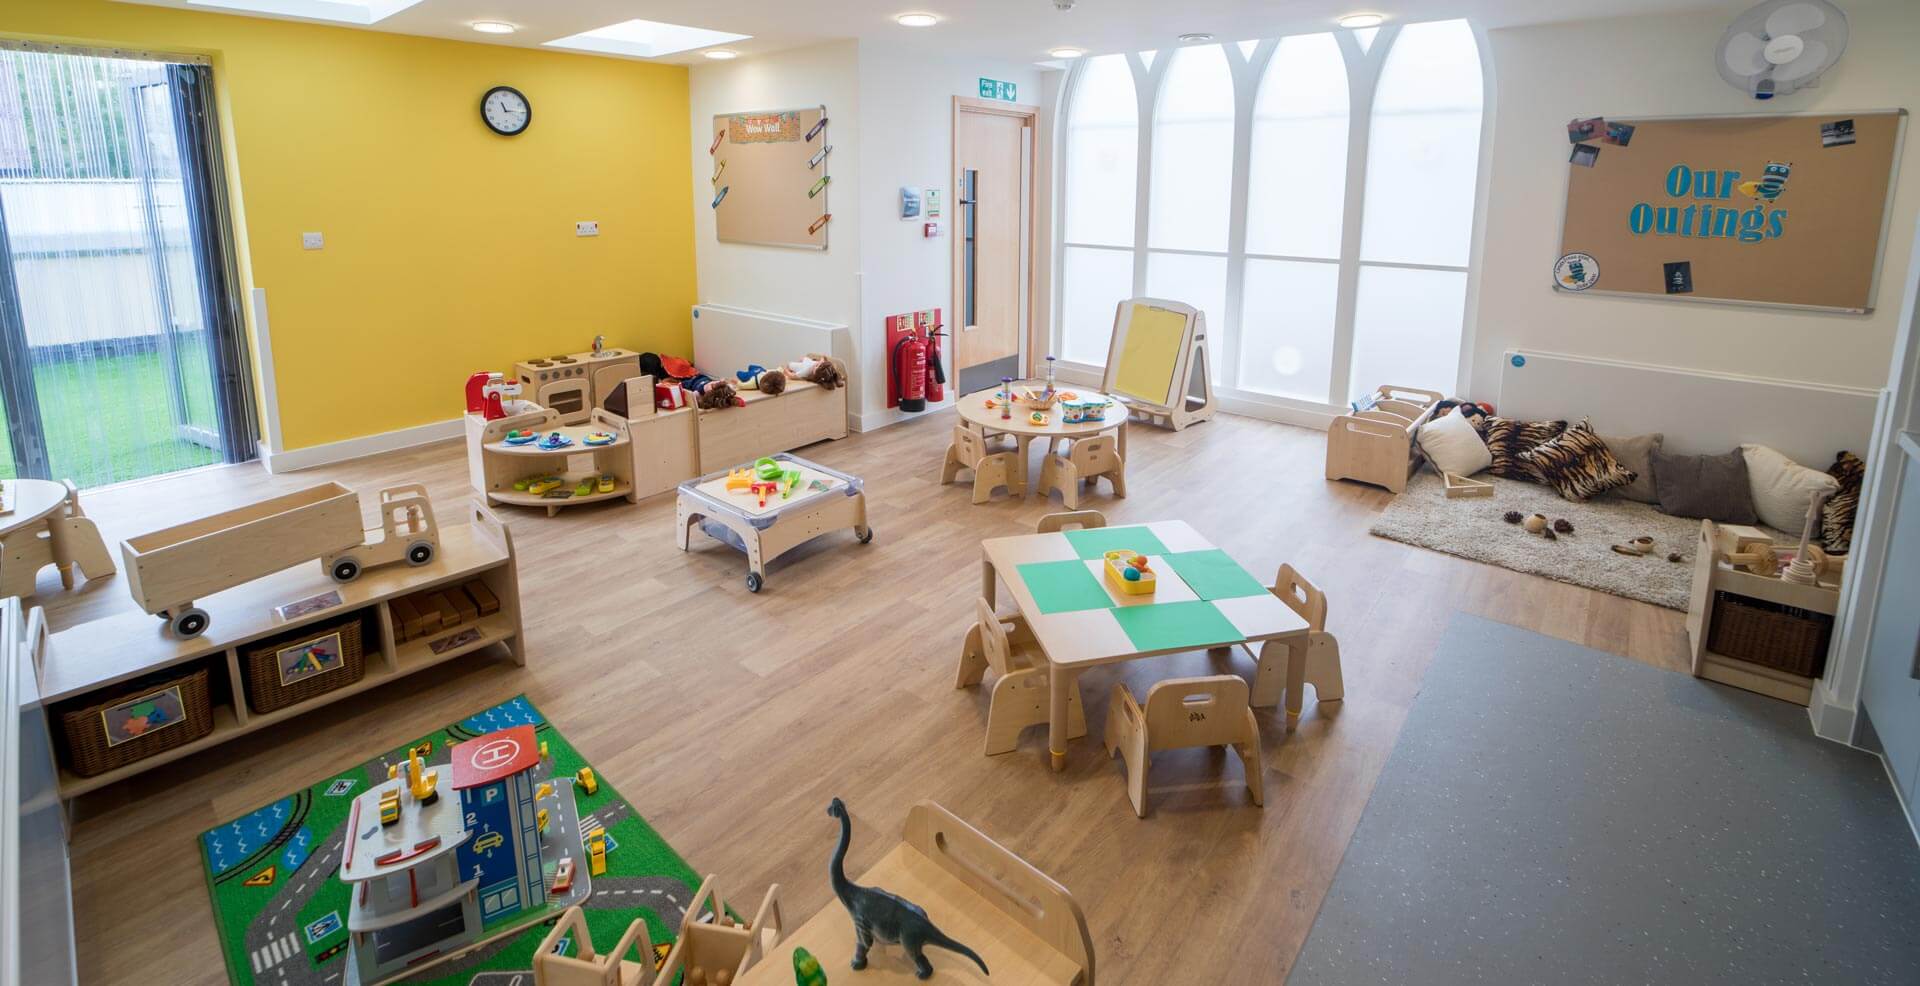 Surbiton Ewell Road Day Nursery and Preschool